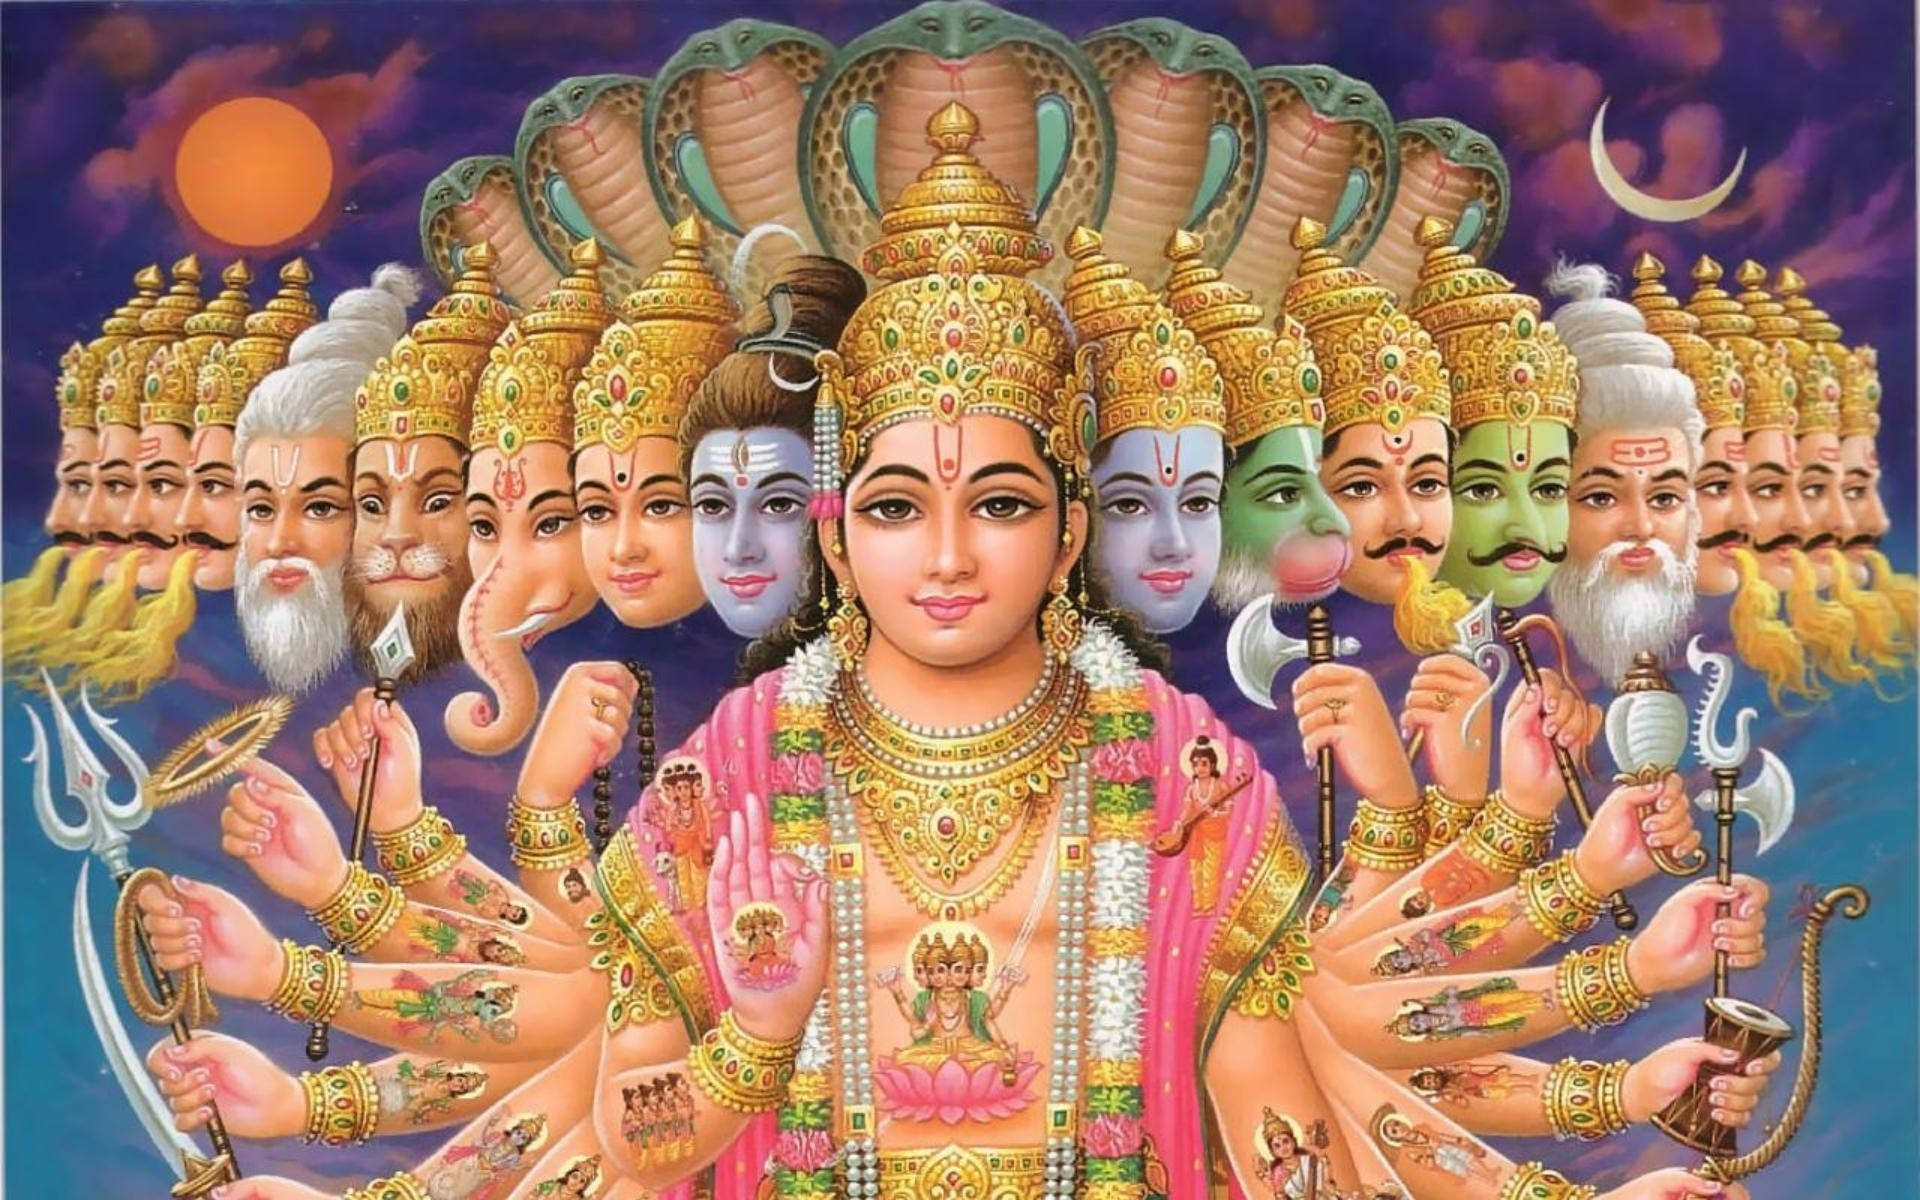 Free Vishnu Hd Wallpaper Downloads, [100+] Vishnu Hd Wallpapers for FREE |  